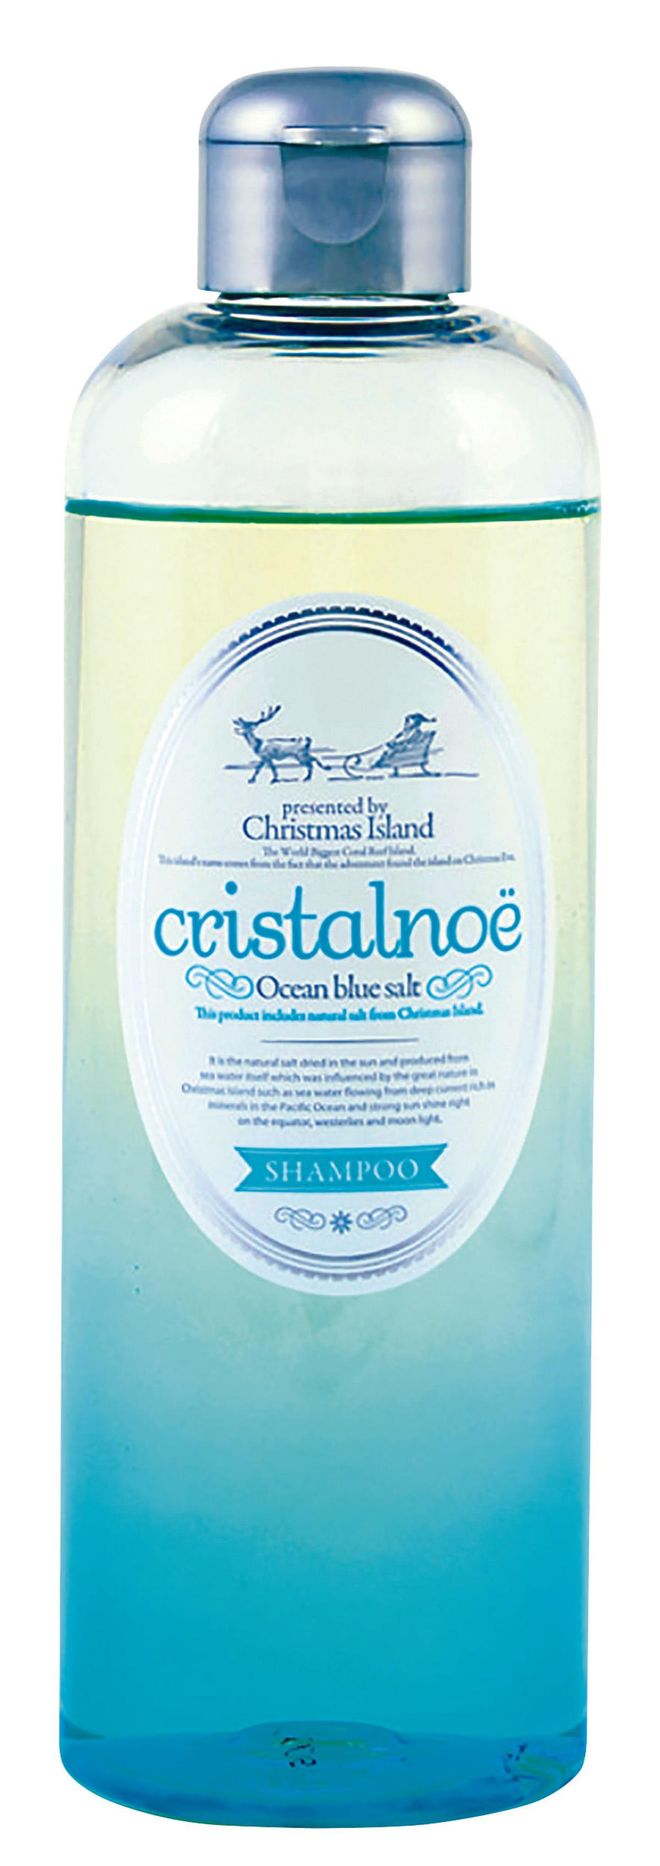 Ocean Blue Salt Shampoo, $64, Cristalnoë